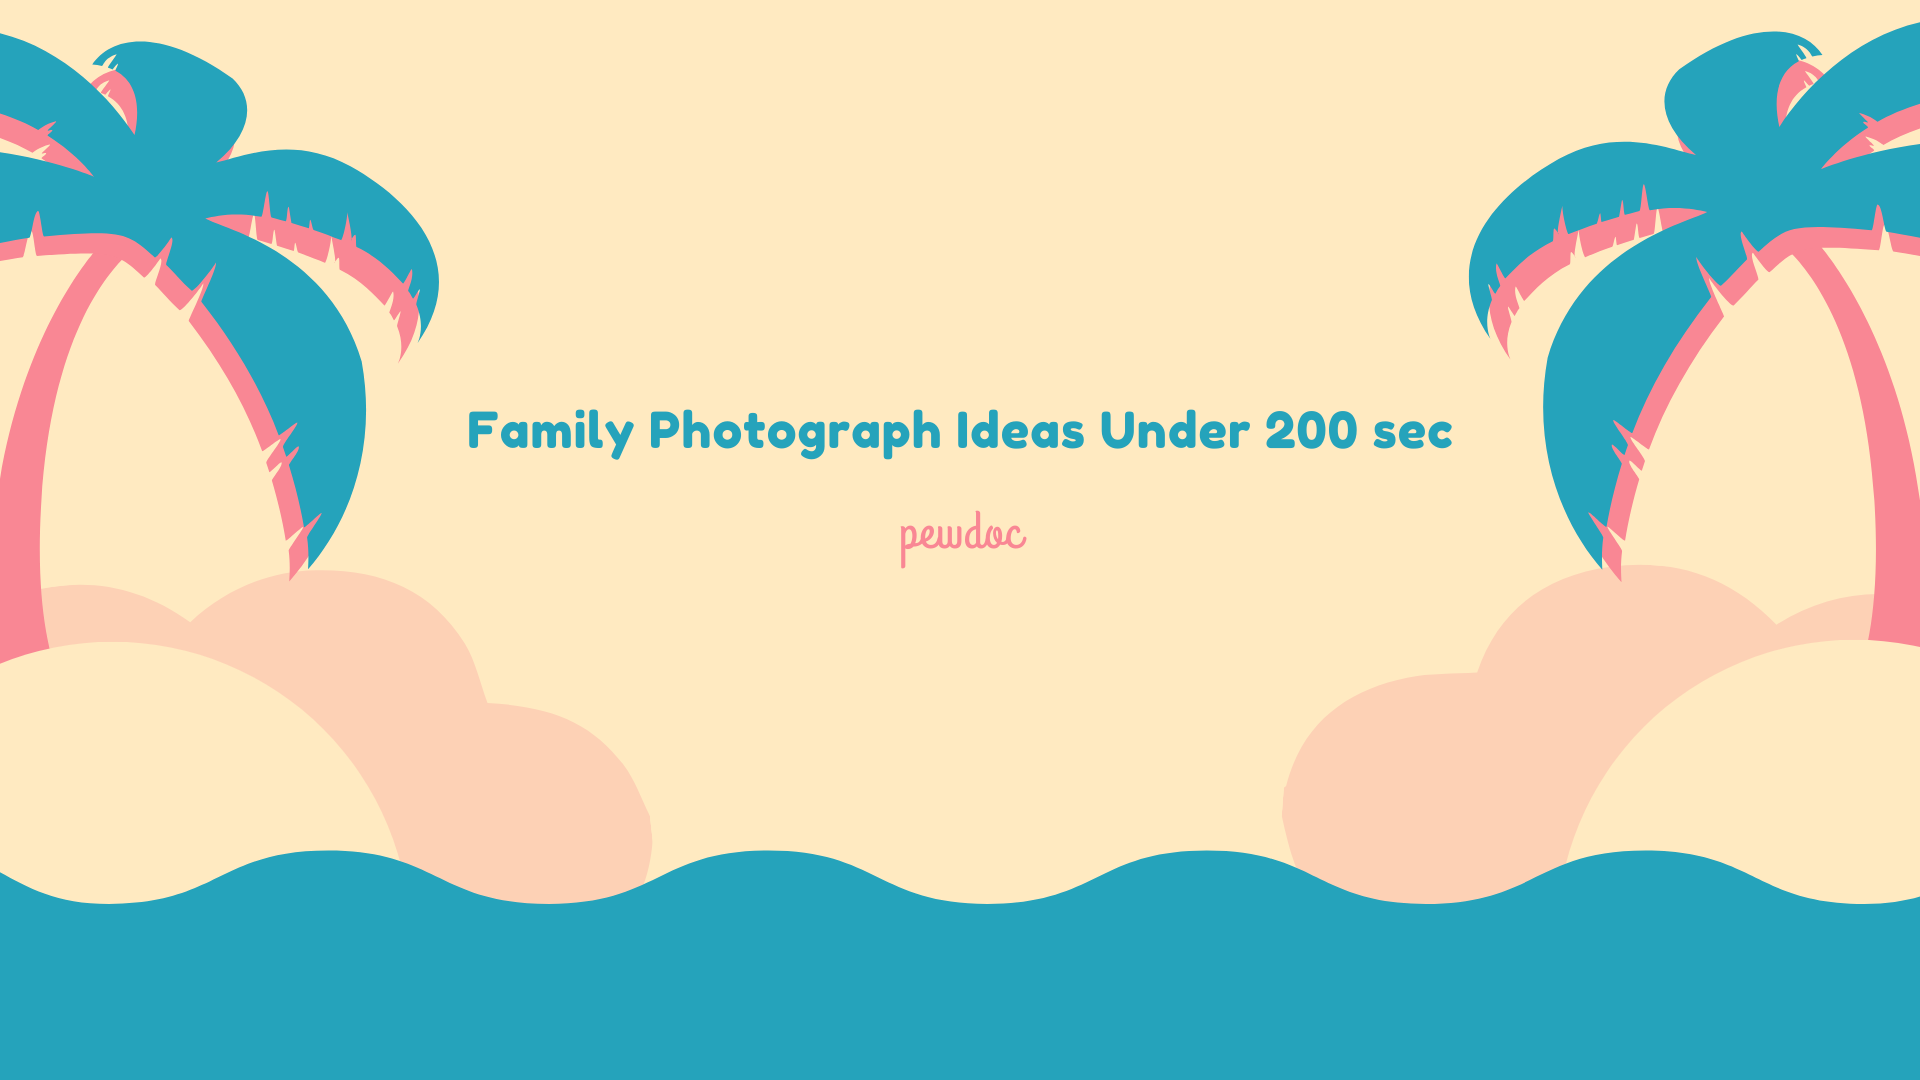 Family Photograph Ideas Under 200 sec